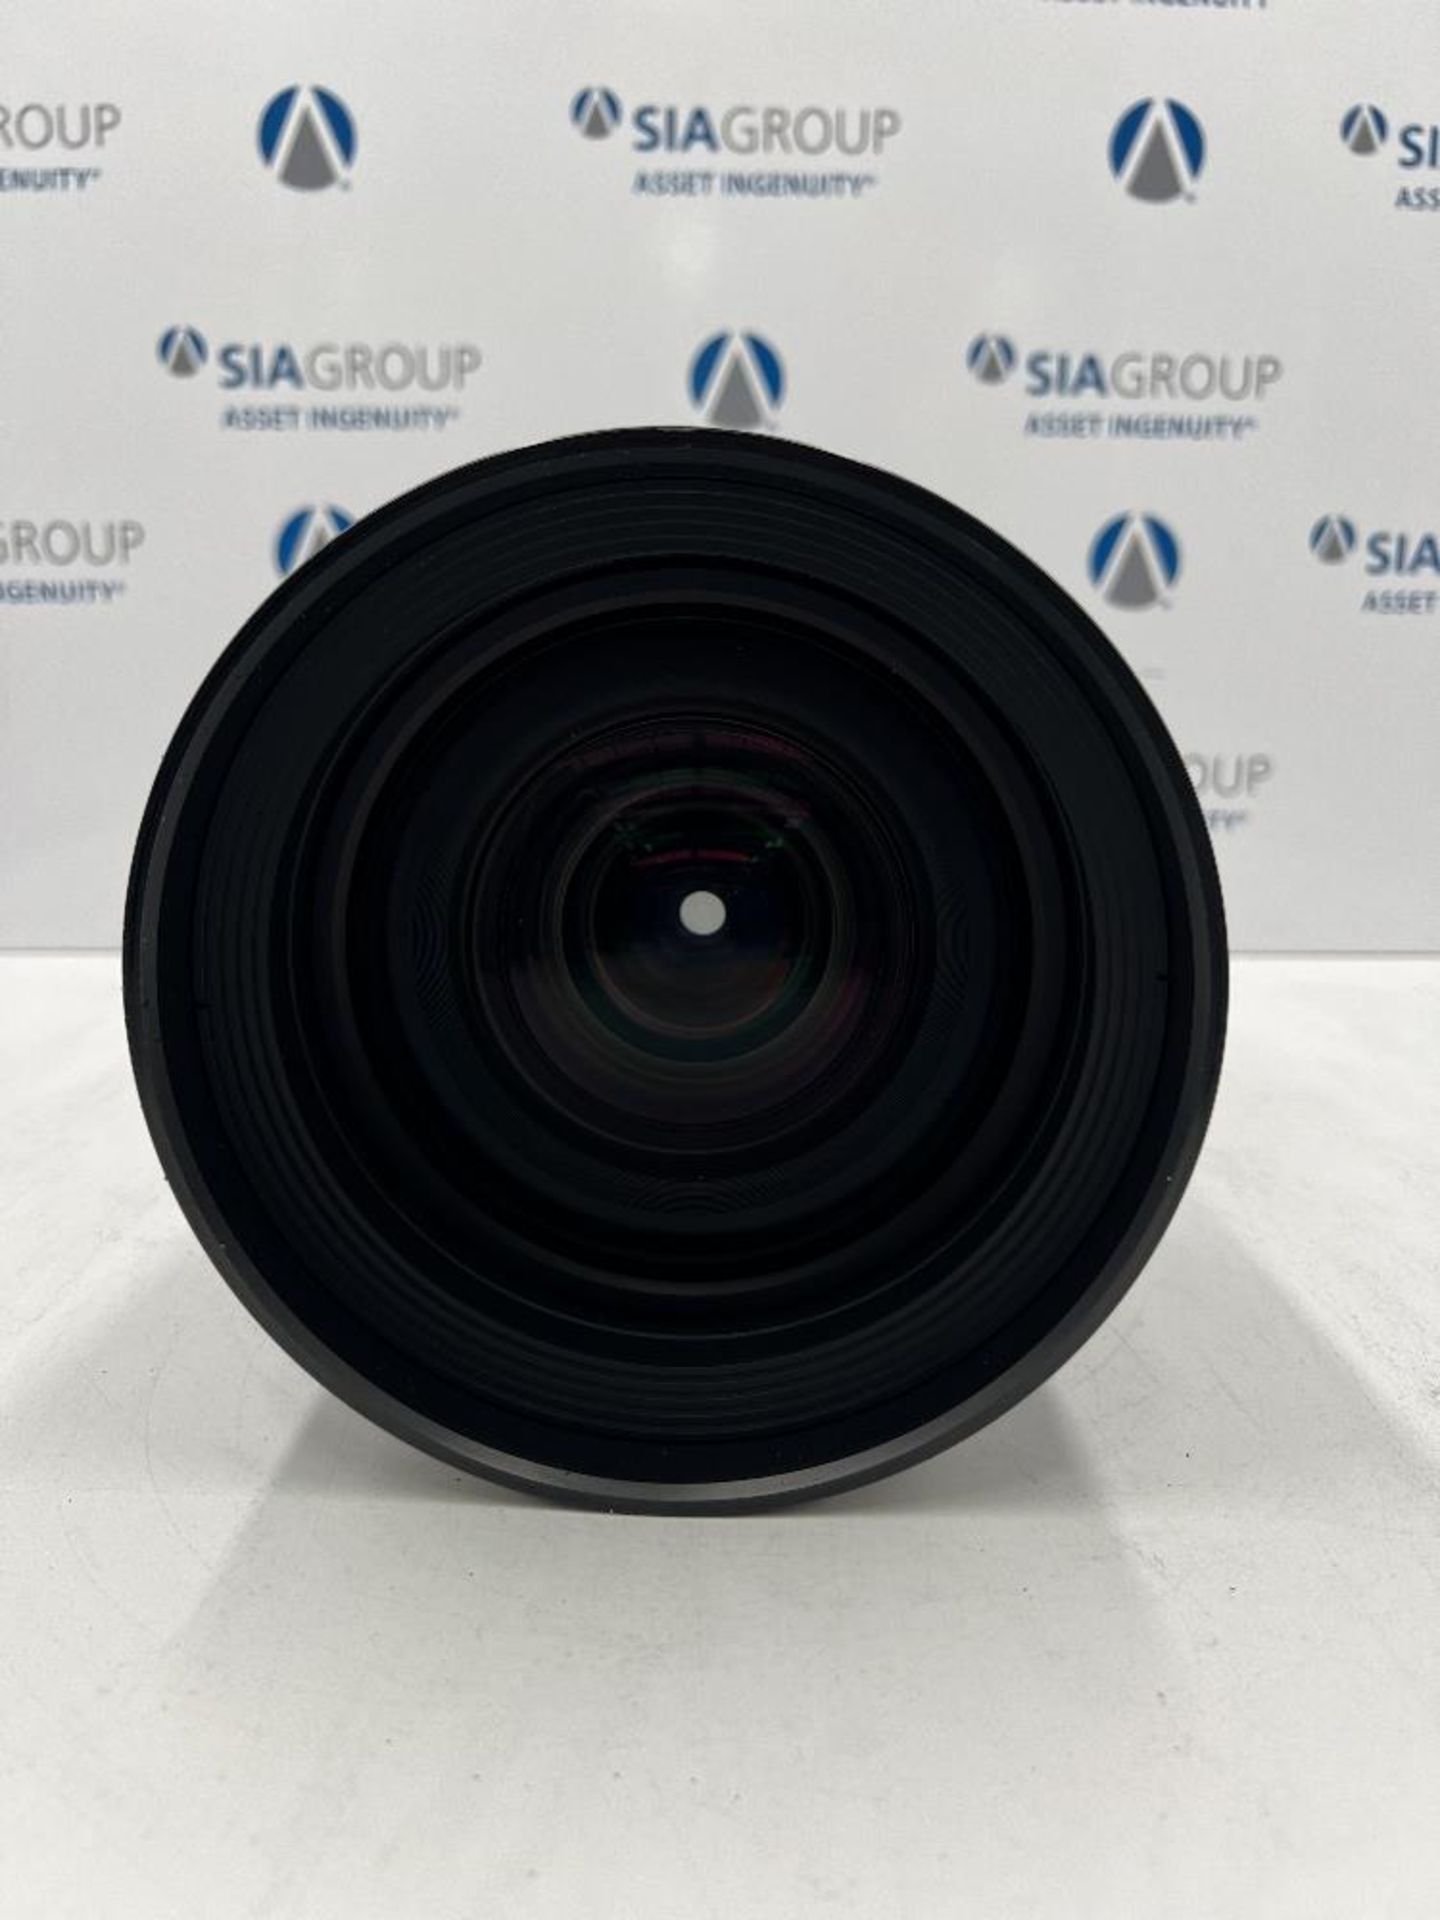 Panasonic ET-D75LE6 0.9-1.1 Zoom Lens With Carrier Case - Image 6 of 10